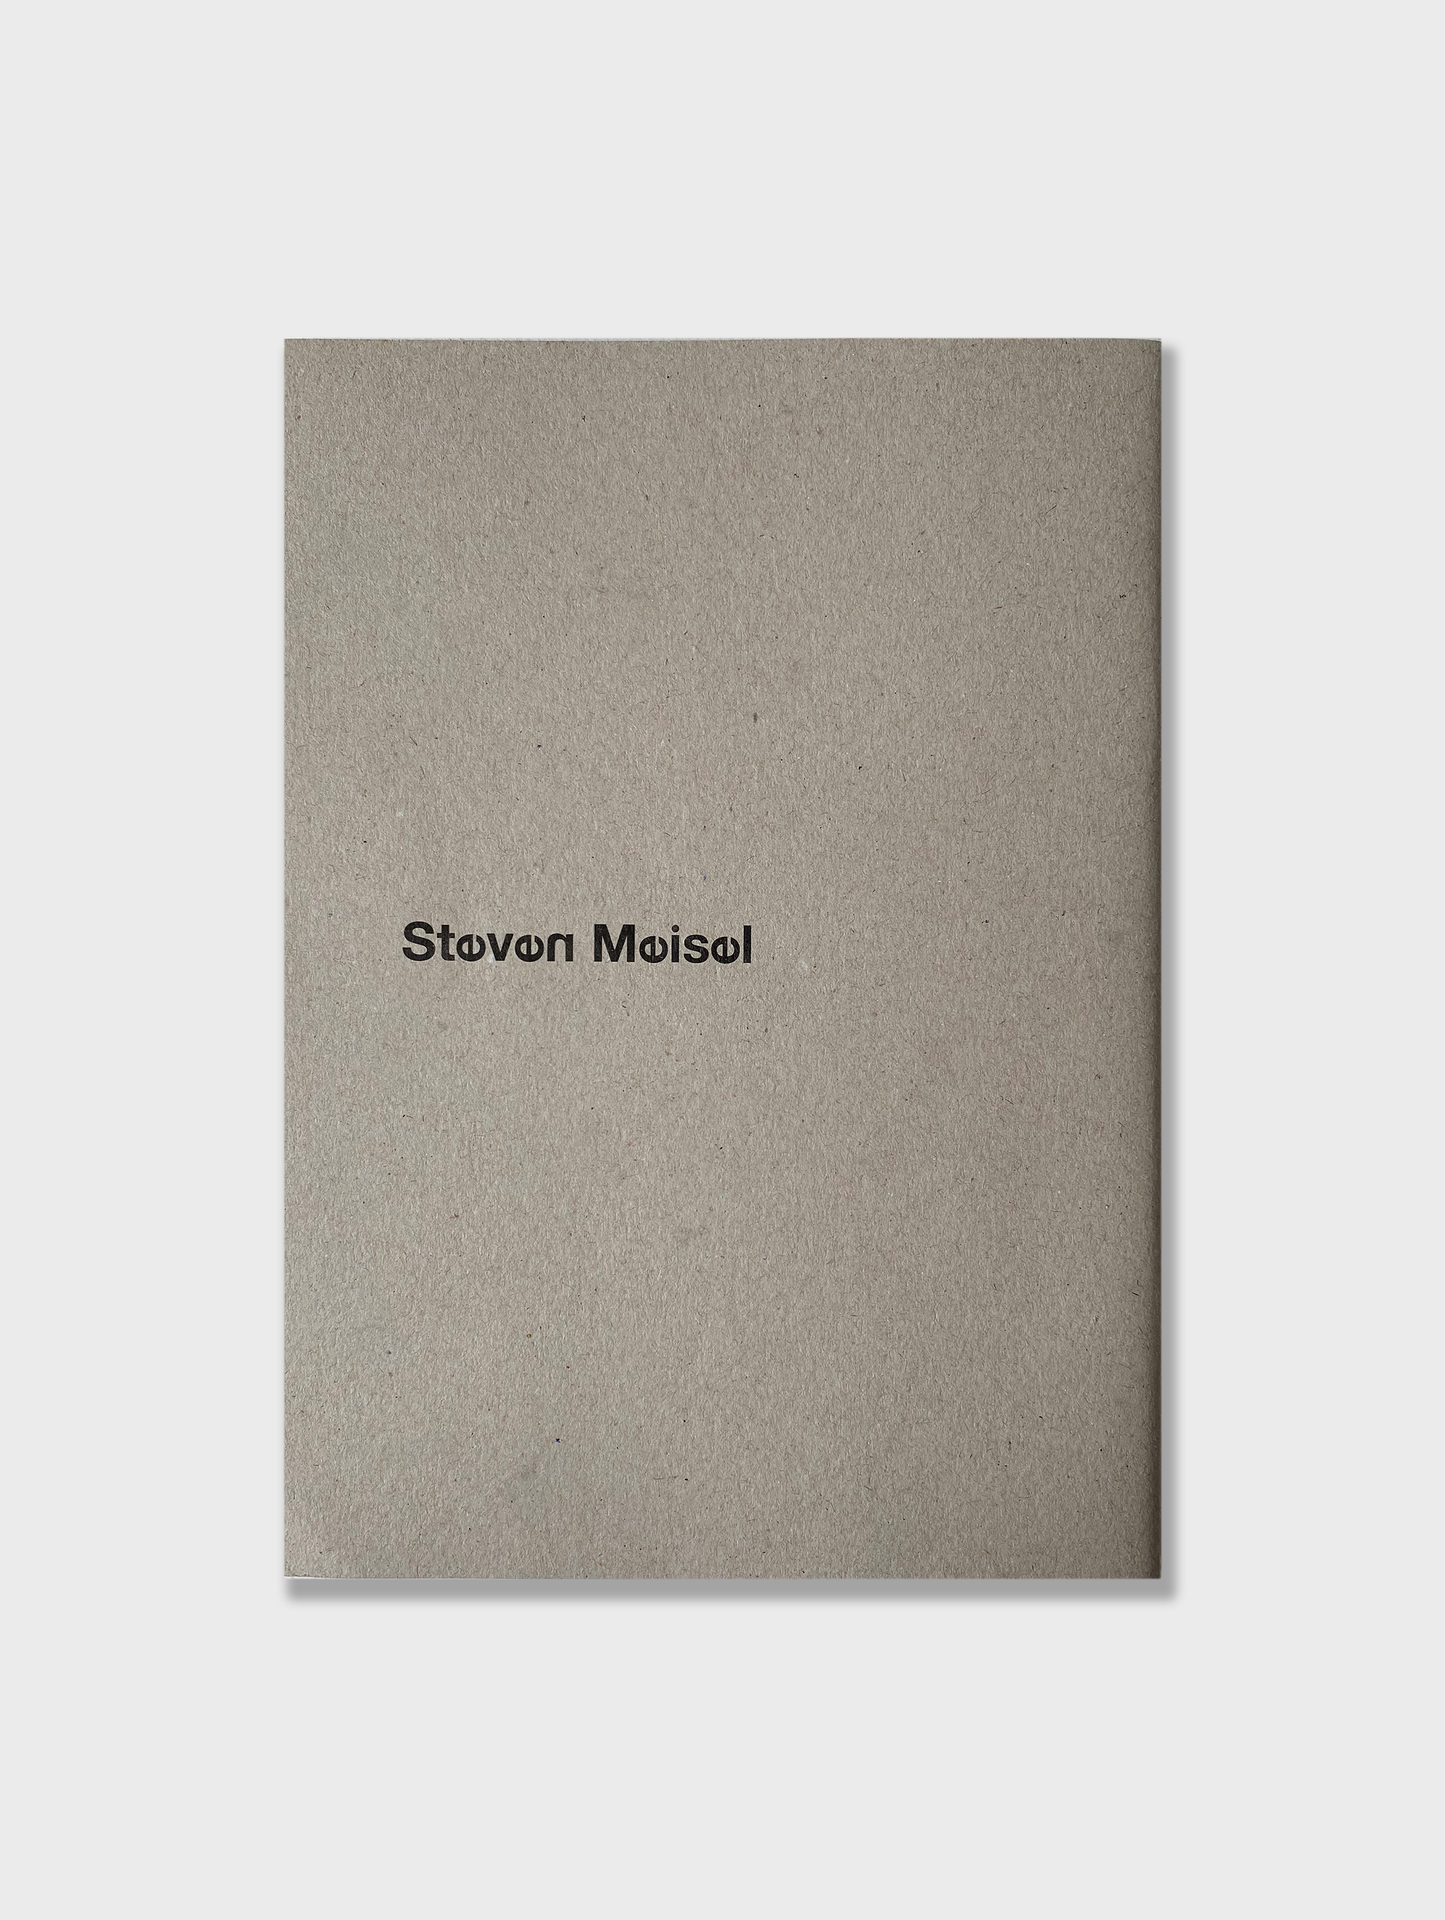 Steven Meisel - A Closer Look (2016)